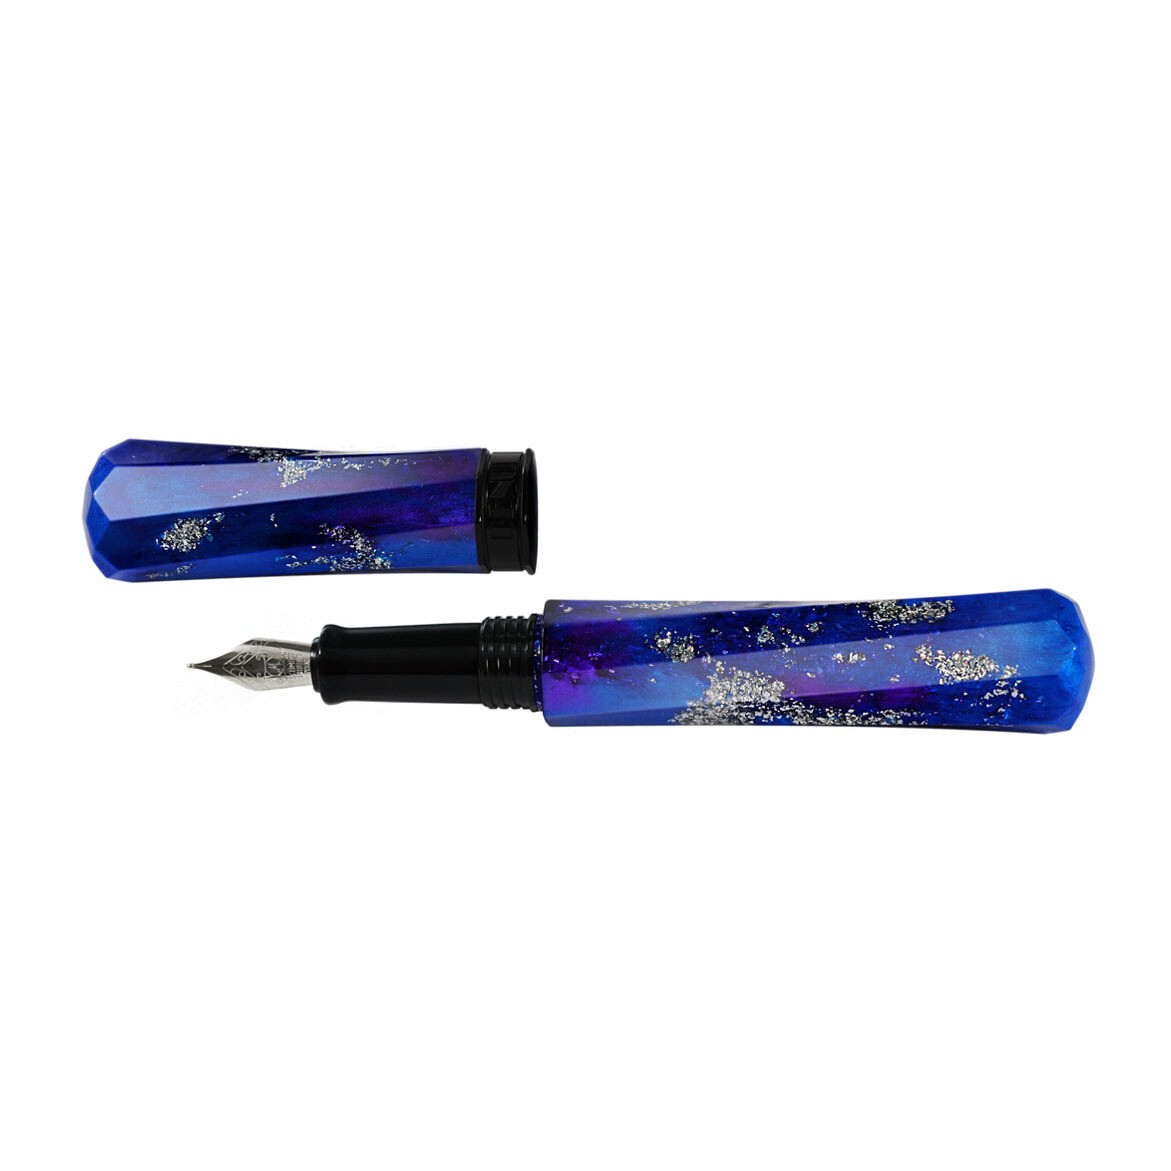 Scepter VIII | Fountain pen